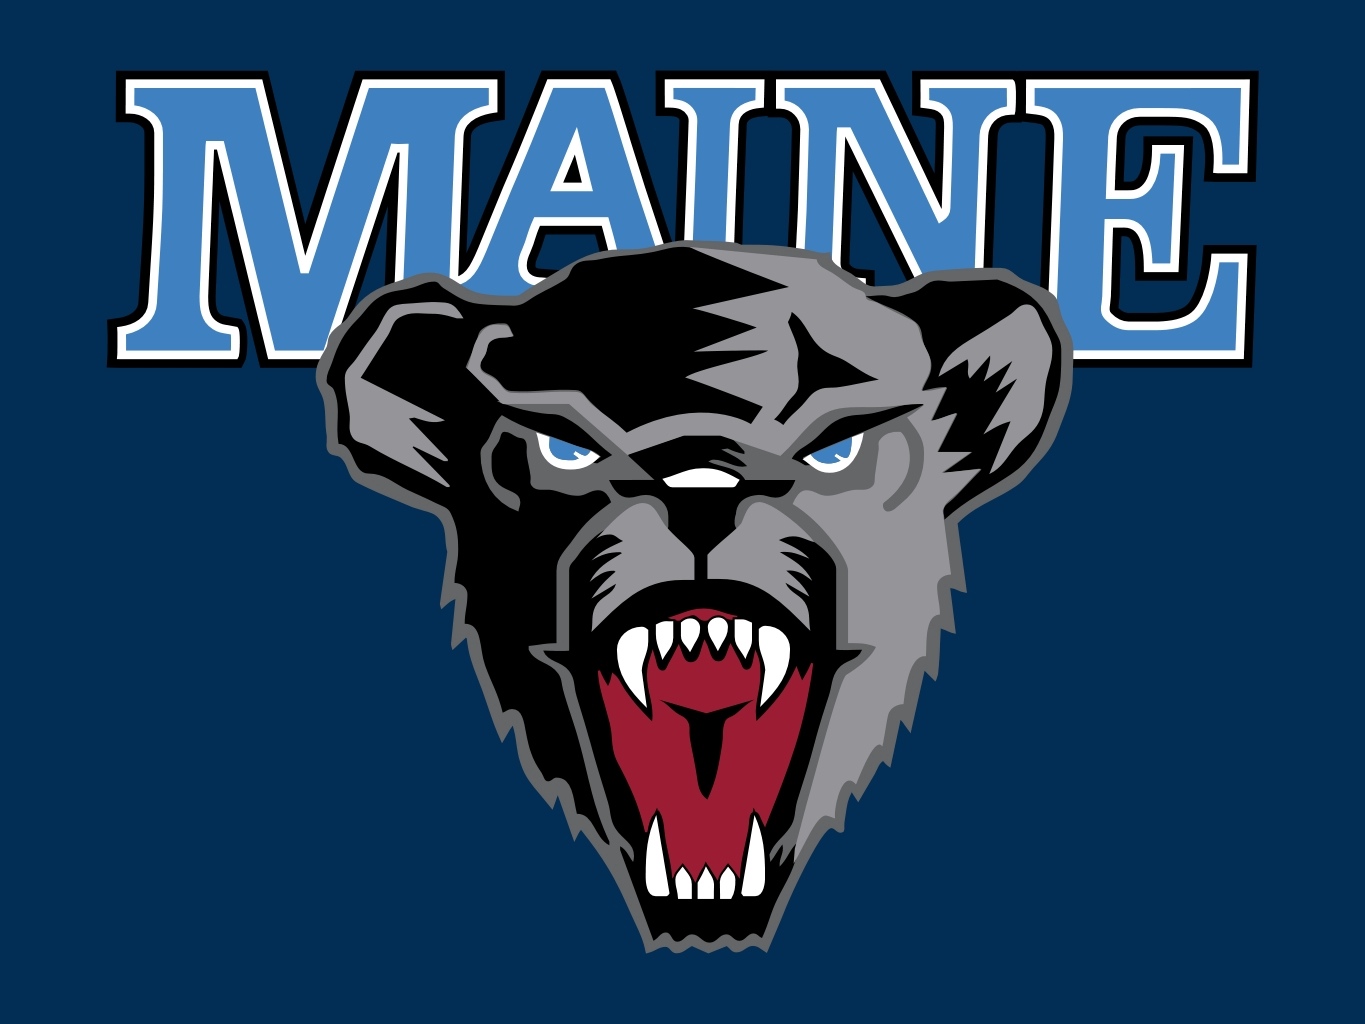 Men's Ice Hockey - University of Maine Athletics